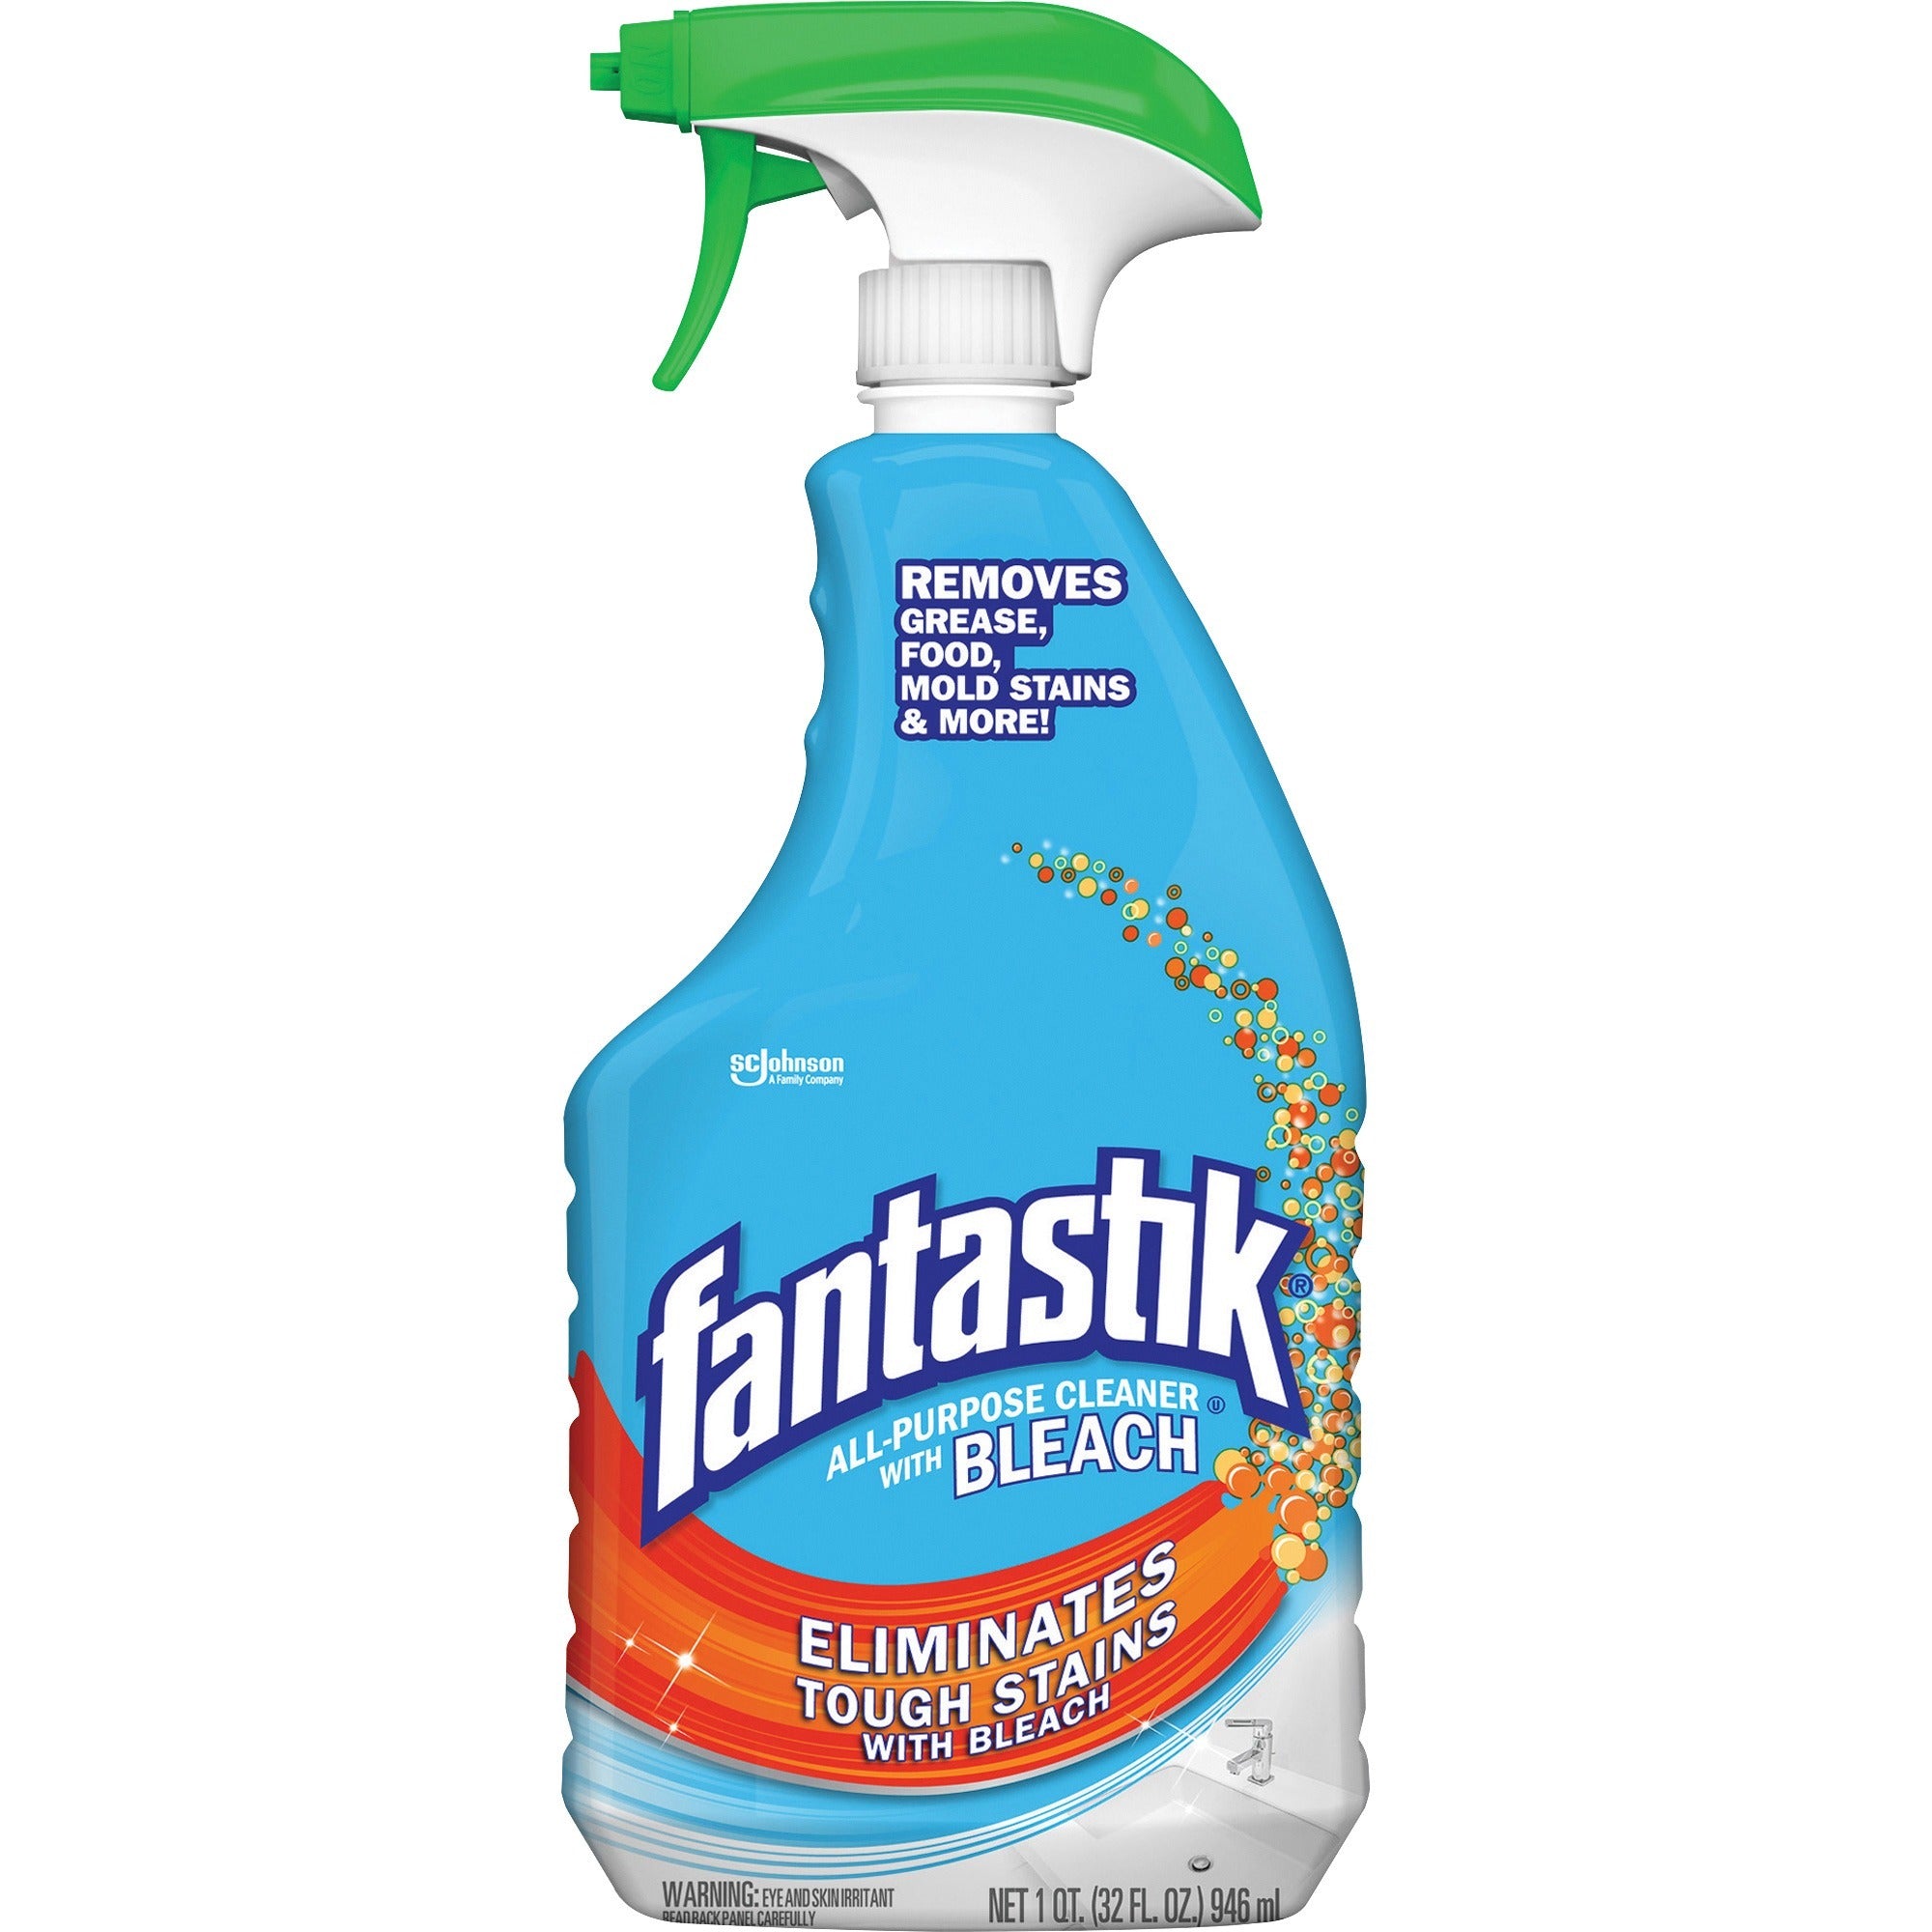 fantastik All-purpose Cleaner with Bleach - 32 fl oz (1 quart) - Fresh Clean Scent - 1 Each - Anti-bacterial - Clear